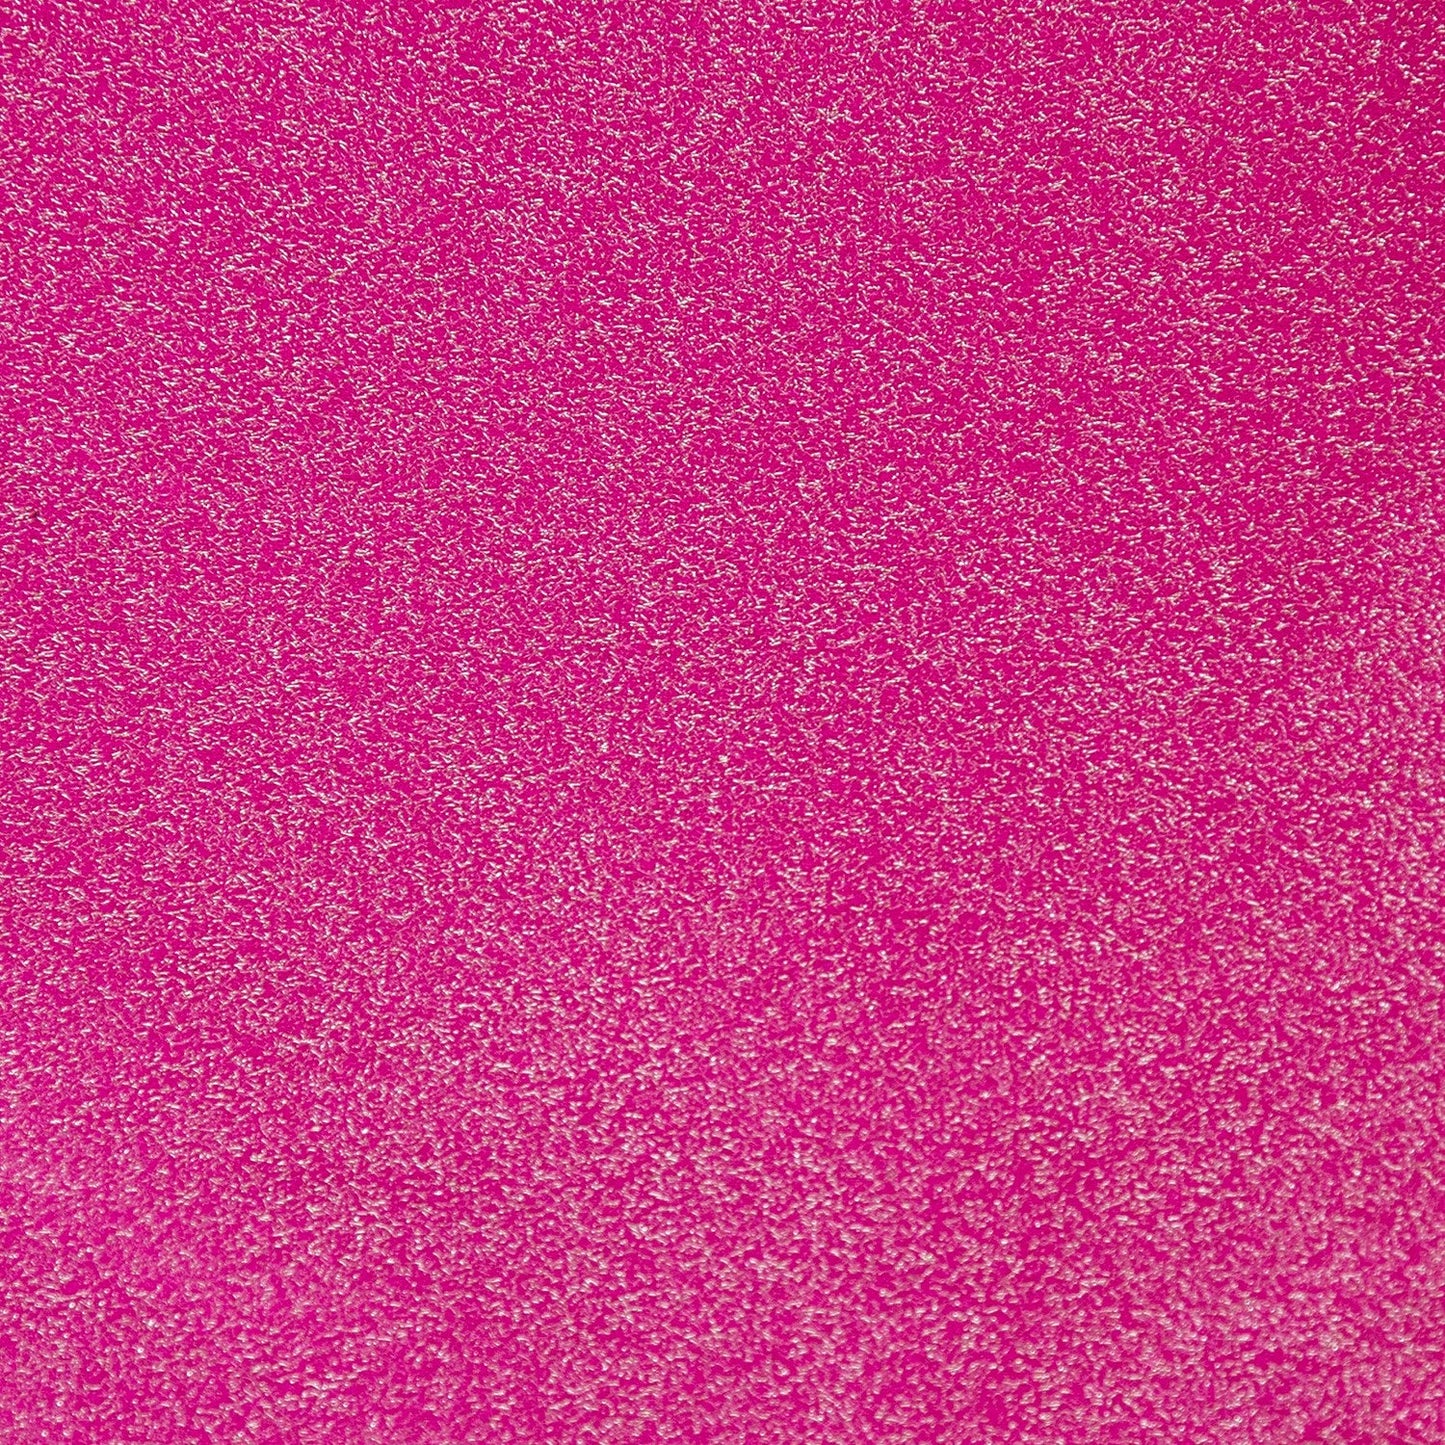 Eidon Kali Triangle Top - Sparkle Pink